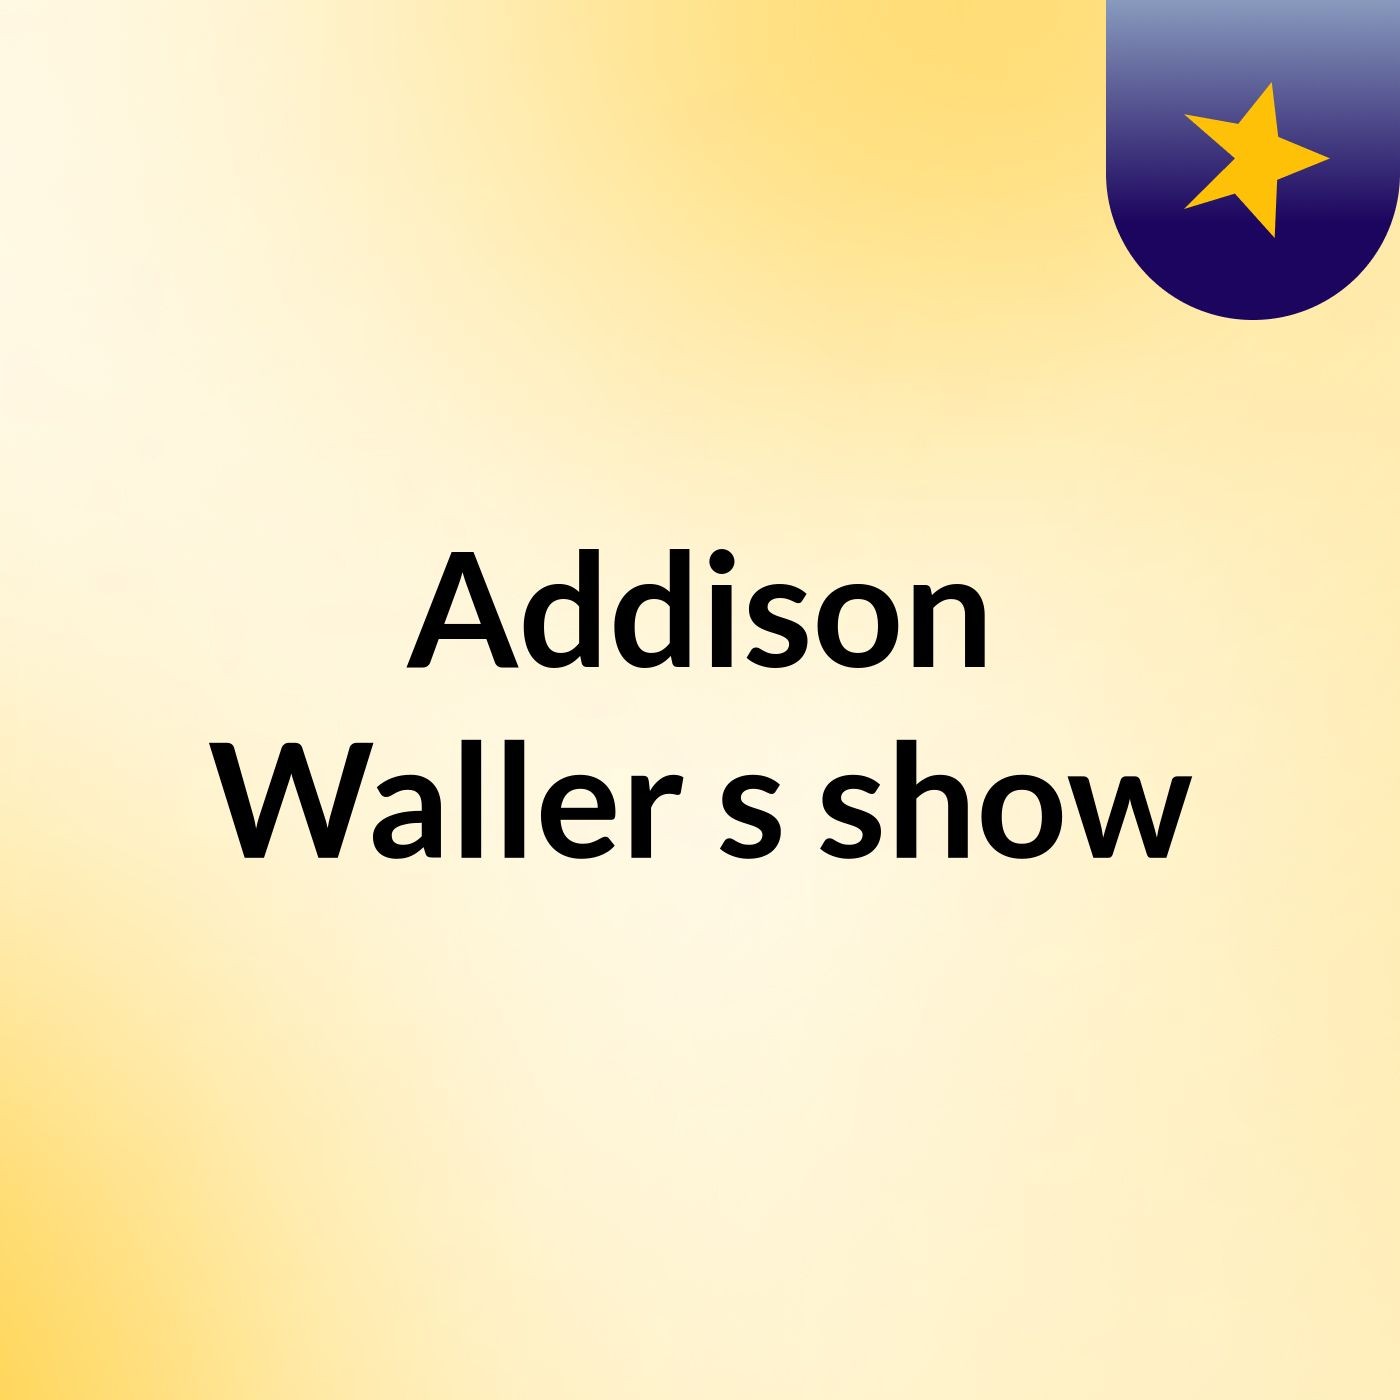 Addison Waller's show